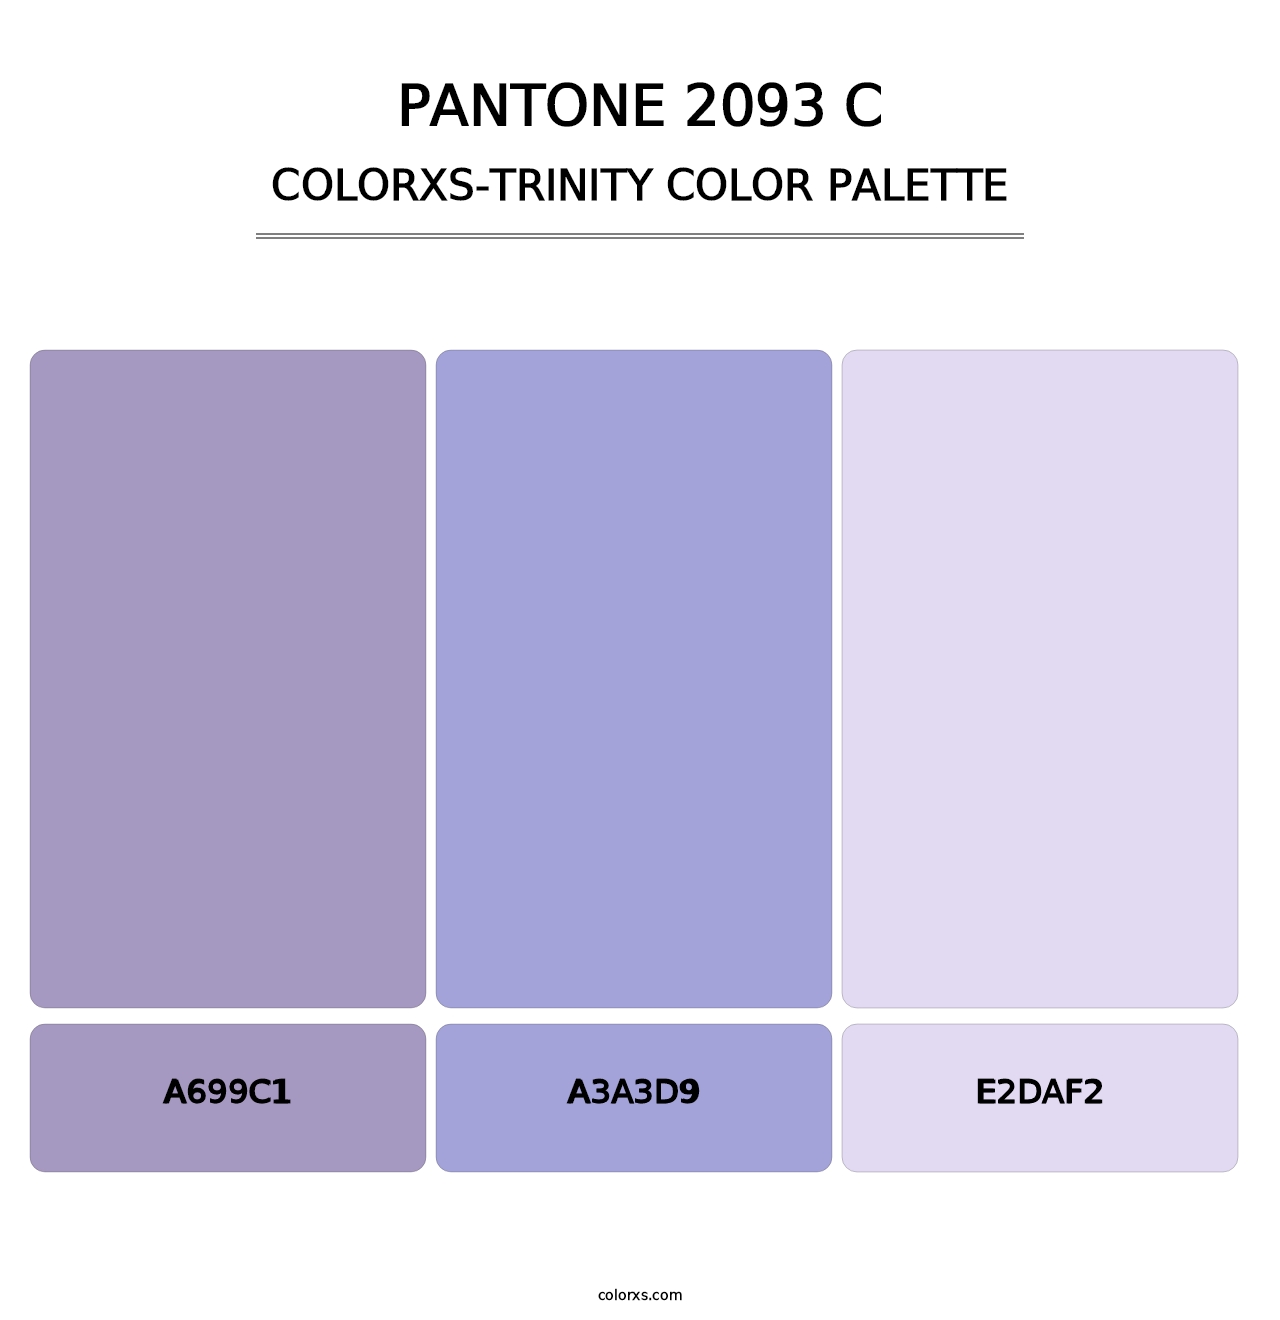 PANTONE 2093 C - Colorxs Trinity Palette